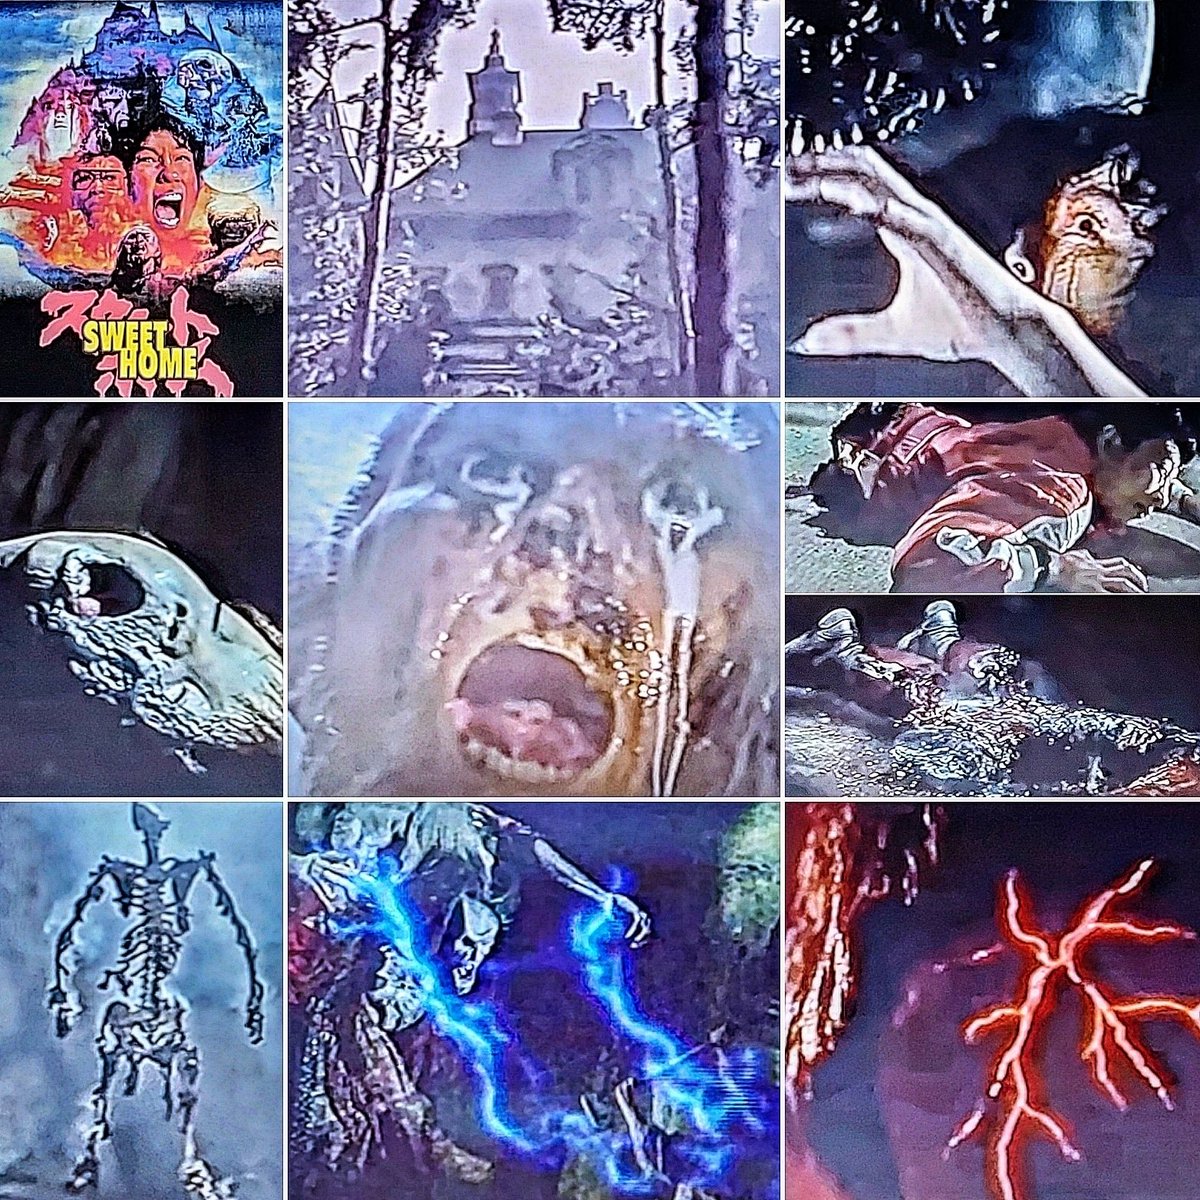 #31horrorfilms31days #octoberhorrormoviechallenge 🎃 : Day 26 - #sweethome 

#hauntedmansion #filmcrew #axed #poltergeist #eyesmelting #slicedinhalf #notorso #skeleton #ghost #electricity #crackedface #japanesehorrormovie #themamiyahouse